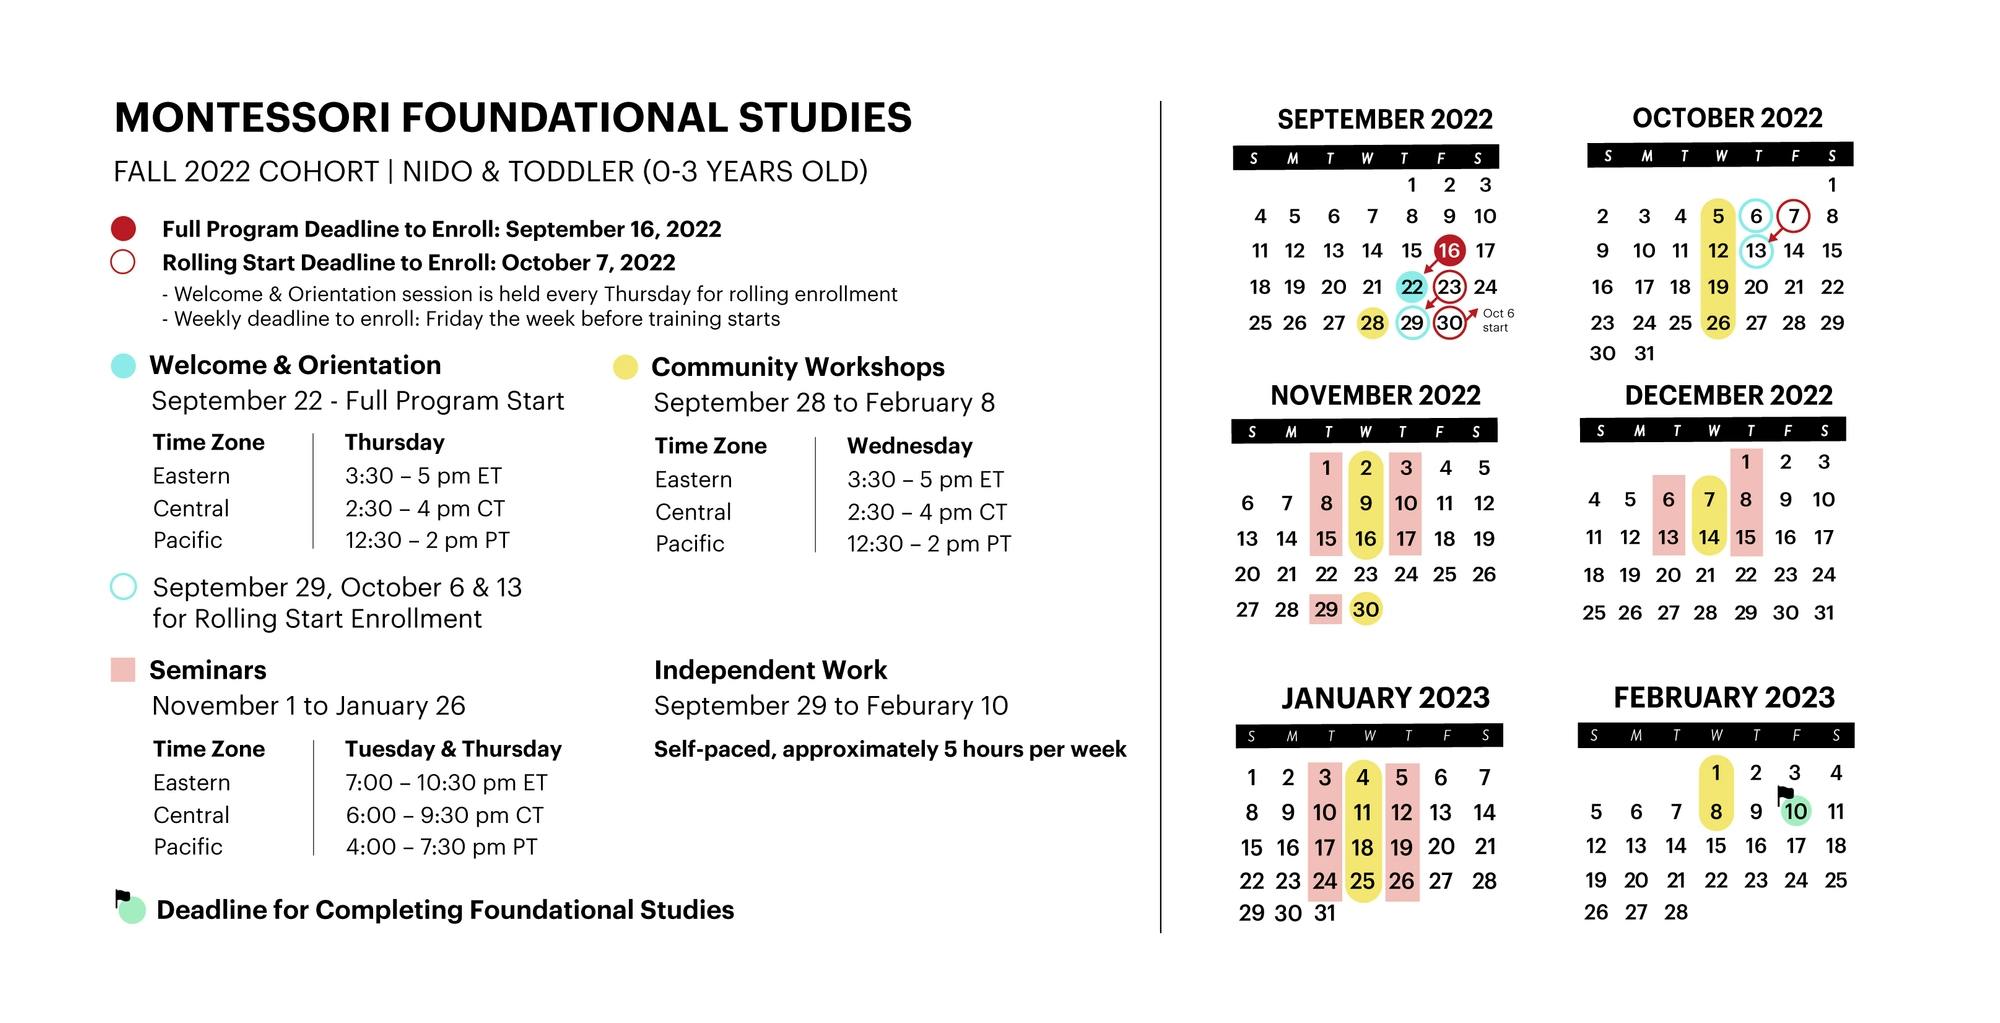 Fall 2022 Cohort - Exclusive for PMI School Partner, Guidepost Montessori